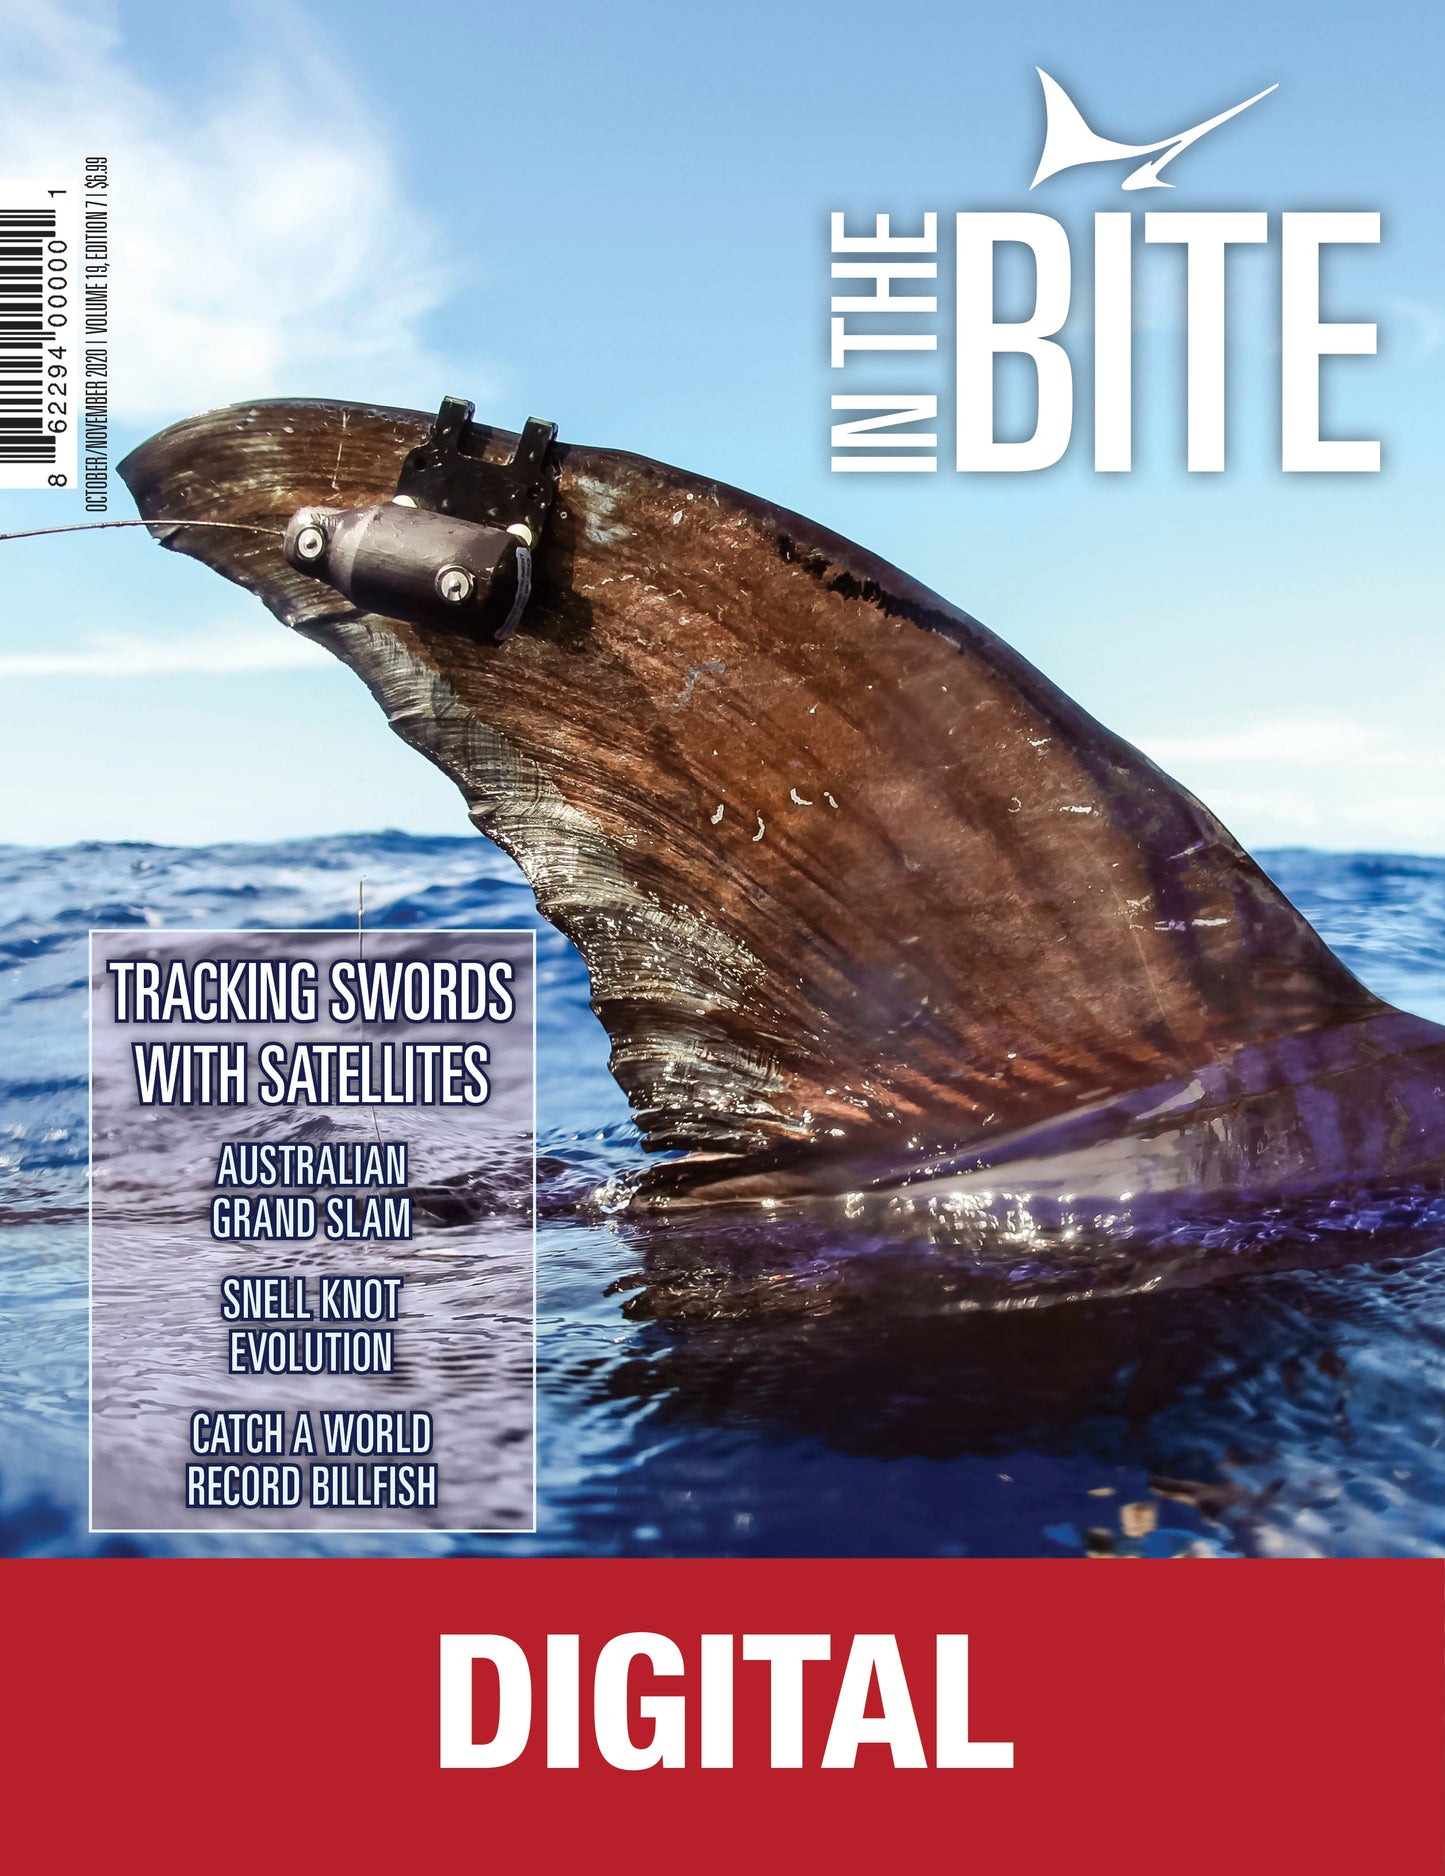 InTheBite Volume 19 Edition 07 - October/November 2020 - Digital Edition